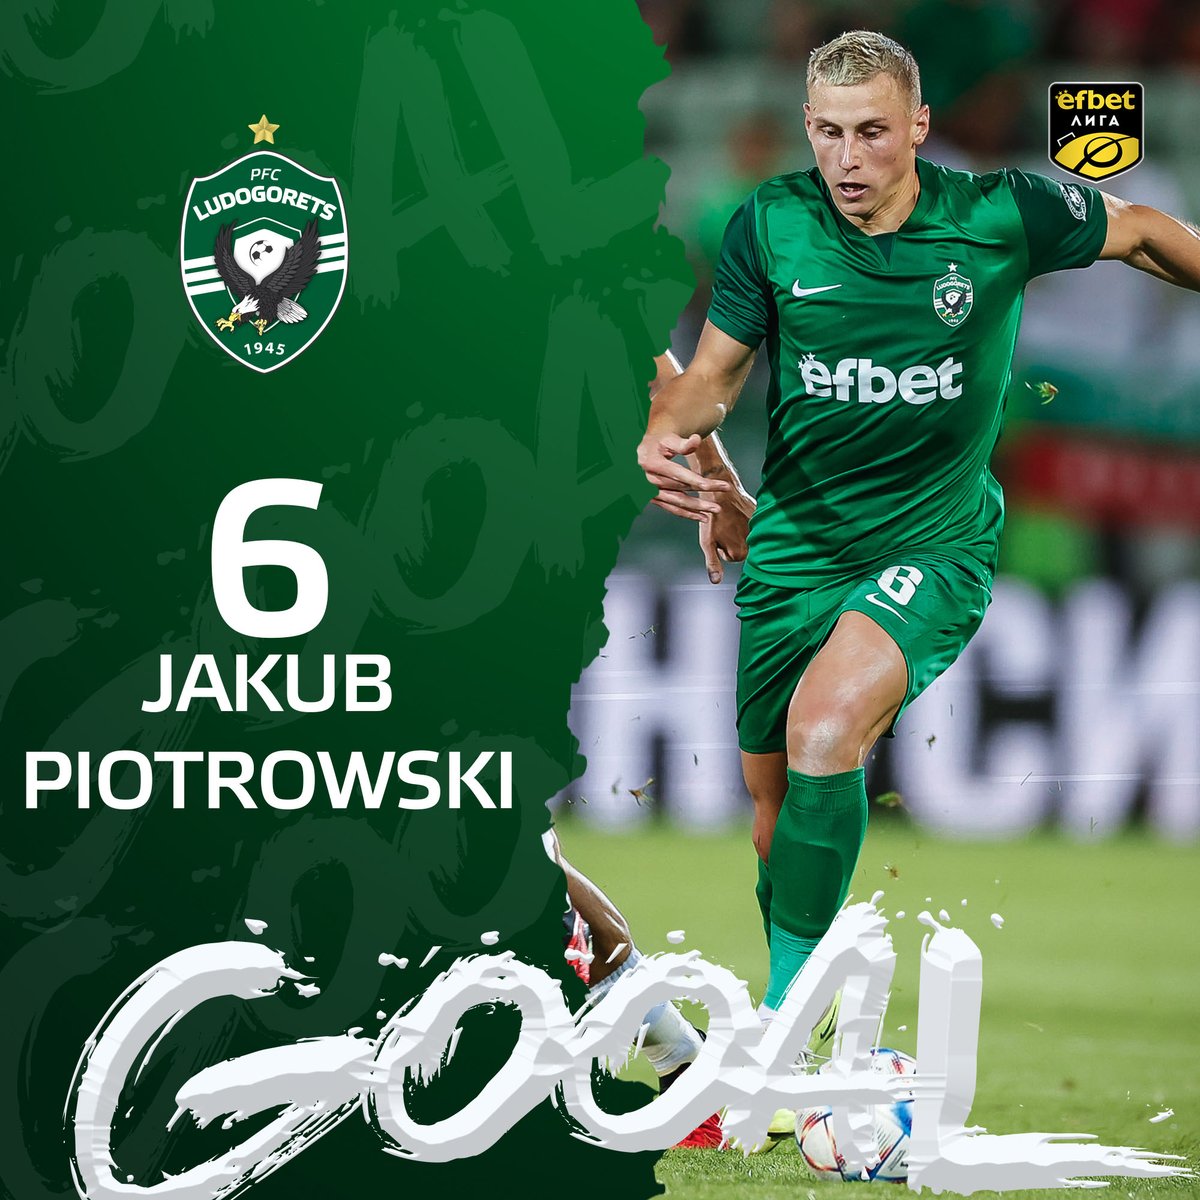 ⚽🏃‍ Jakub Piotrowski scores for 3:0 against Etar (Veliko Tarnovo) #etar #ludogorets #etarludogorets